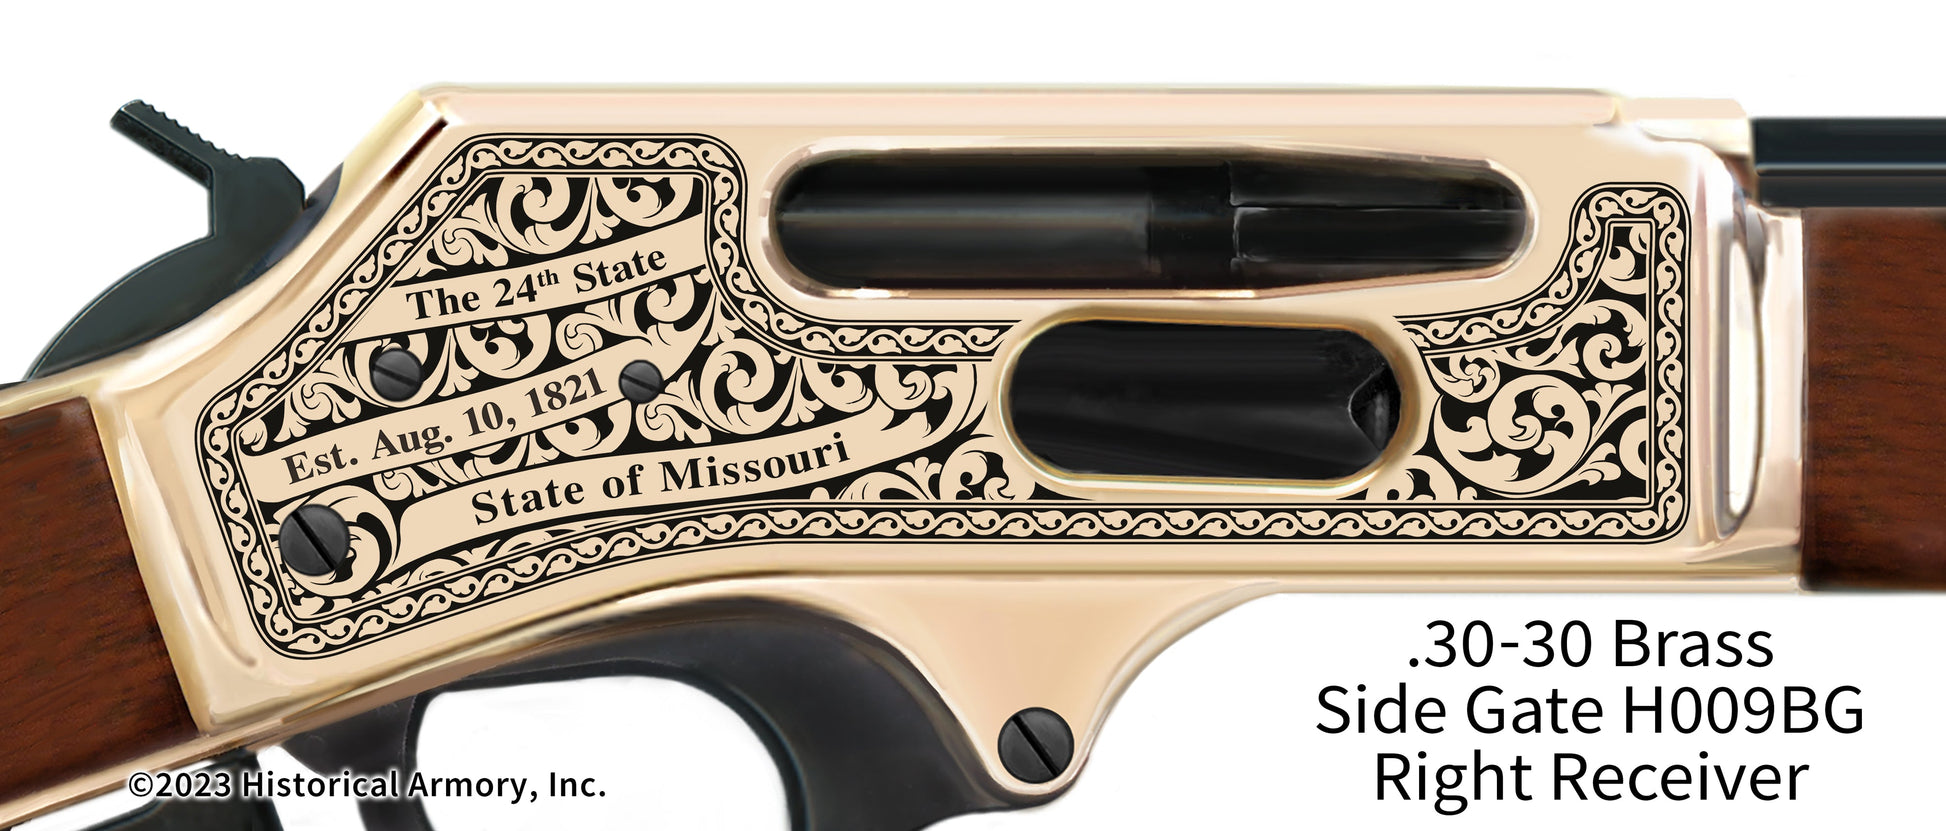 Linn County Missouri Engraved Henry .30-30 Brass Side Gate Rifle